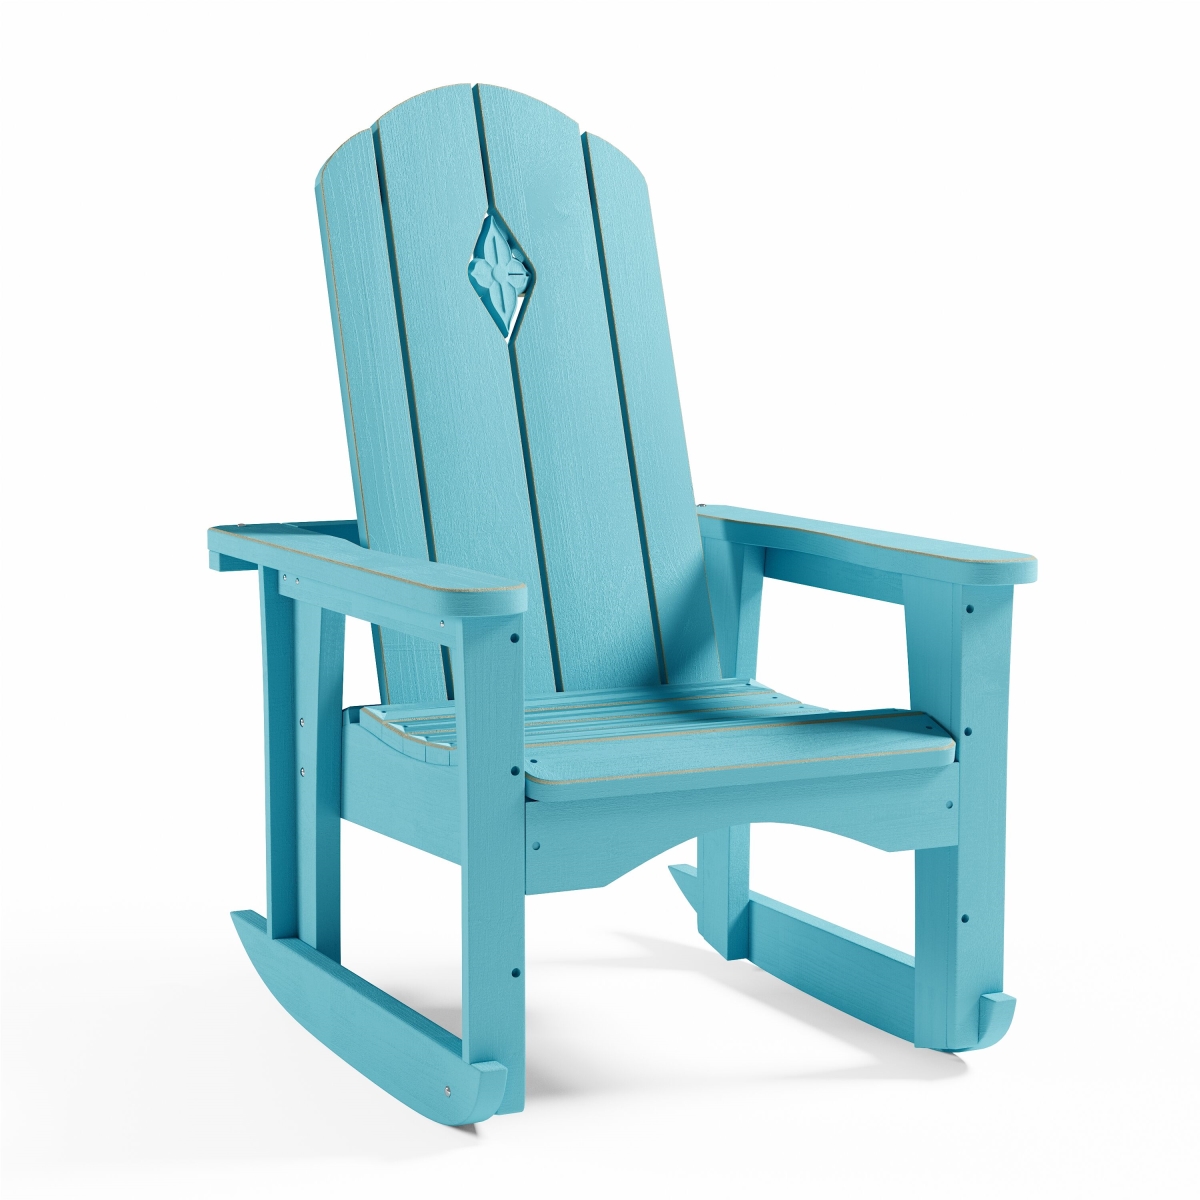 Hogan Supplies Cali Wood Rocker Lounge Chair, Natural Pine - 30 x 33.5 x 42 in.